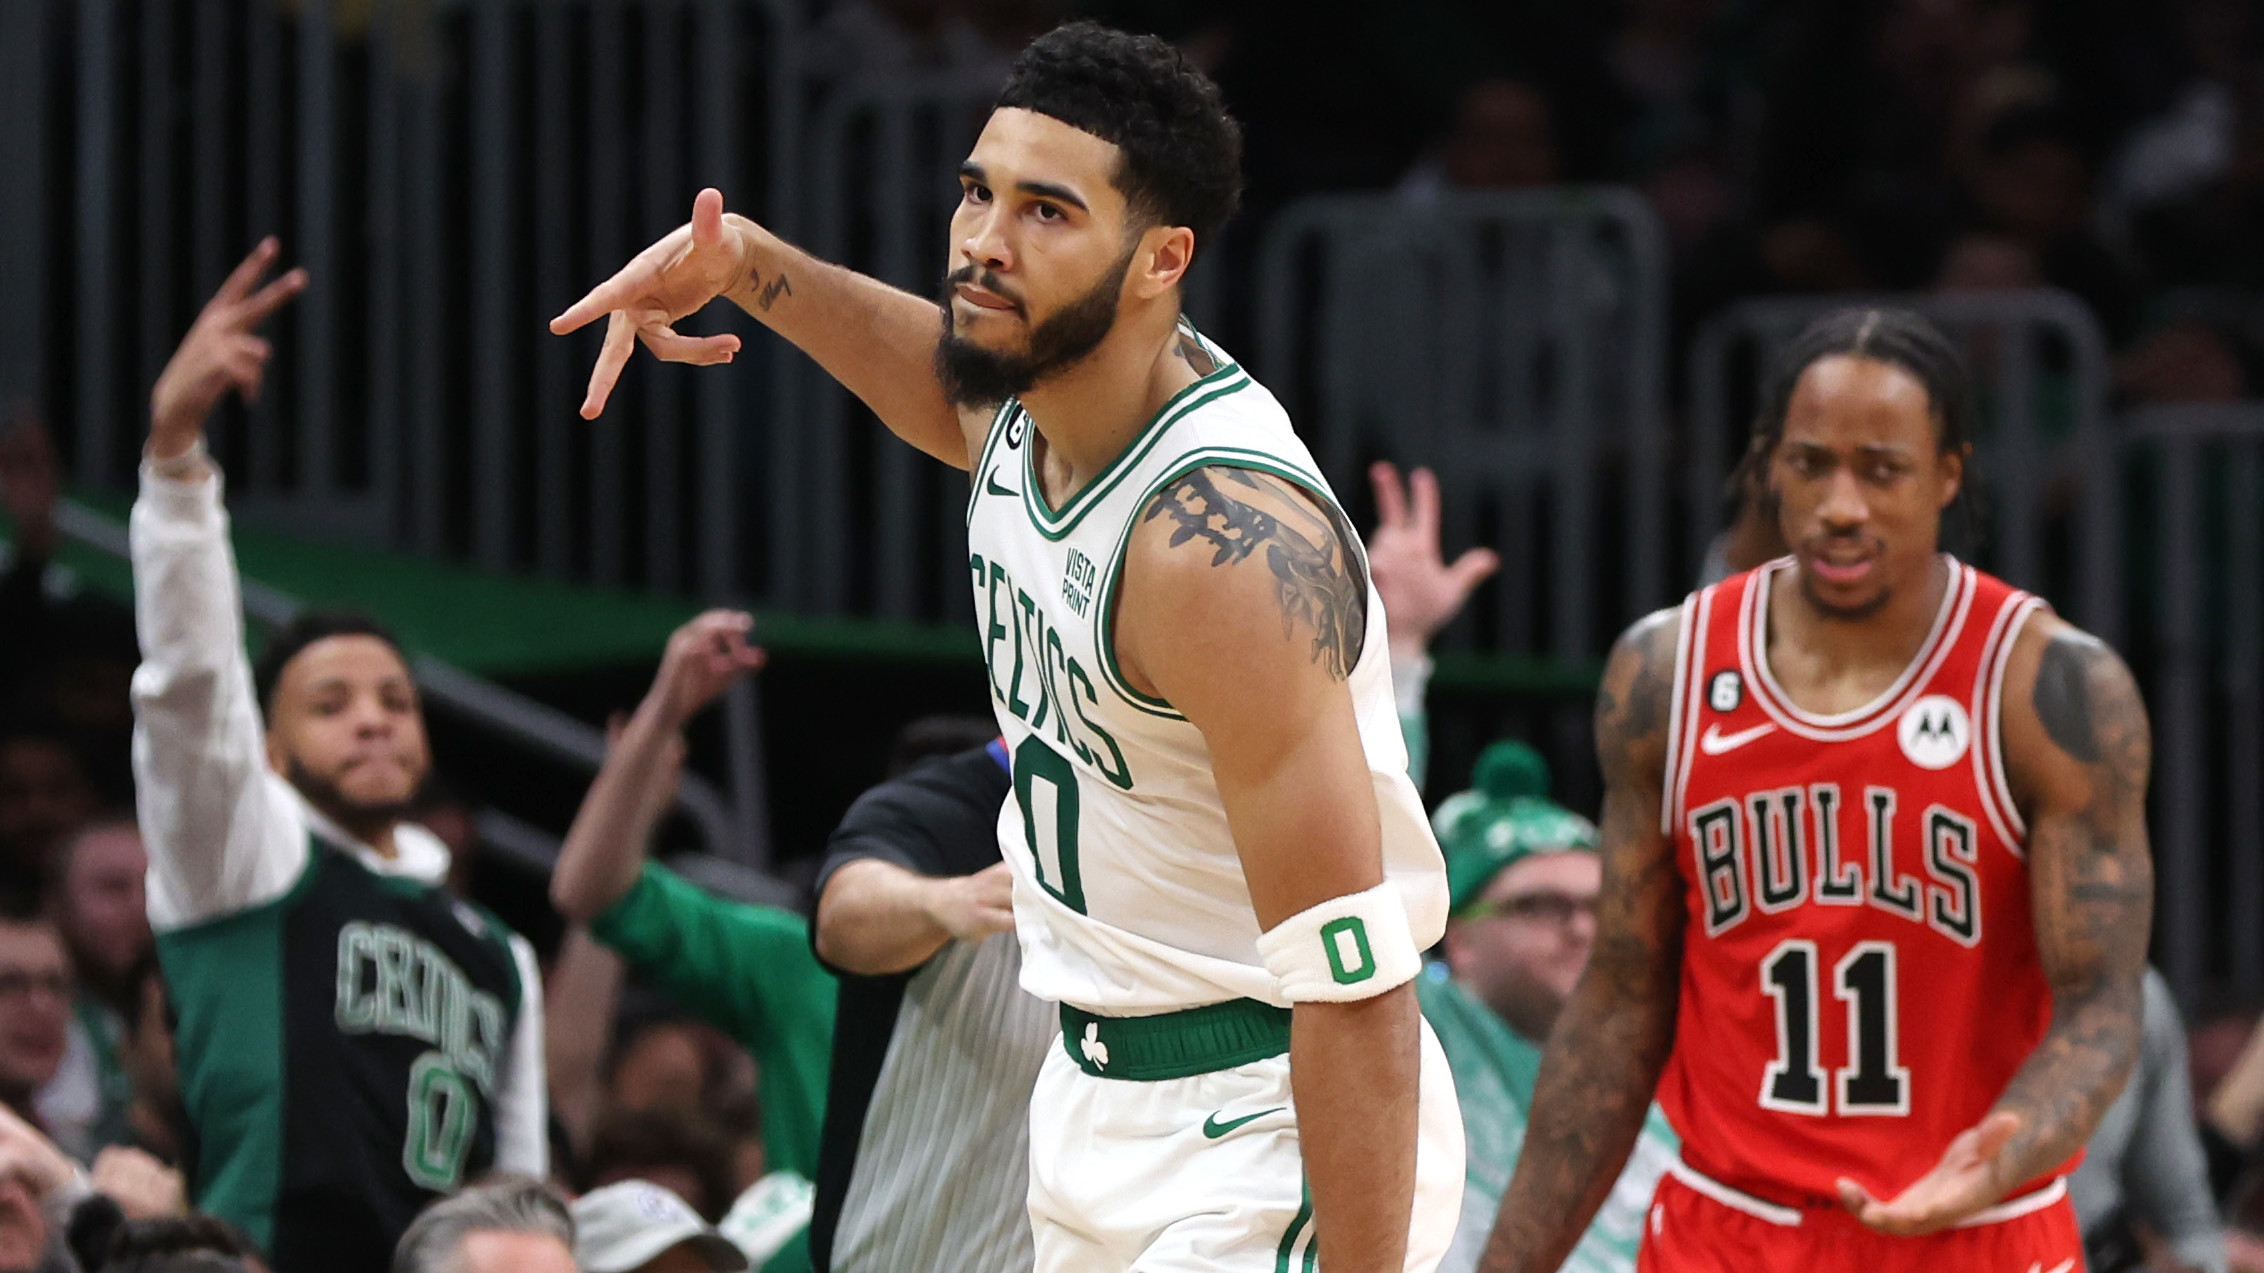 I'm the best player': Jayson Tatum sounds off after Celtics OT win